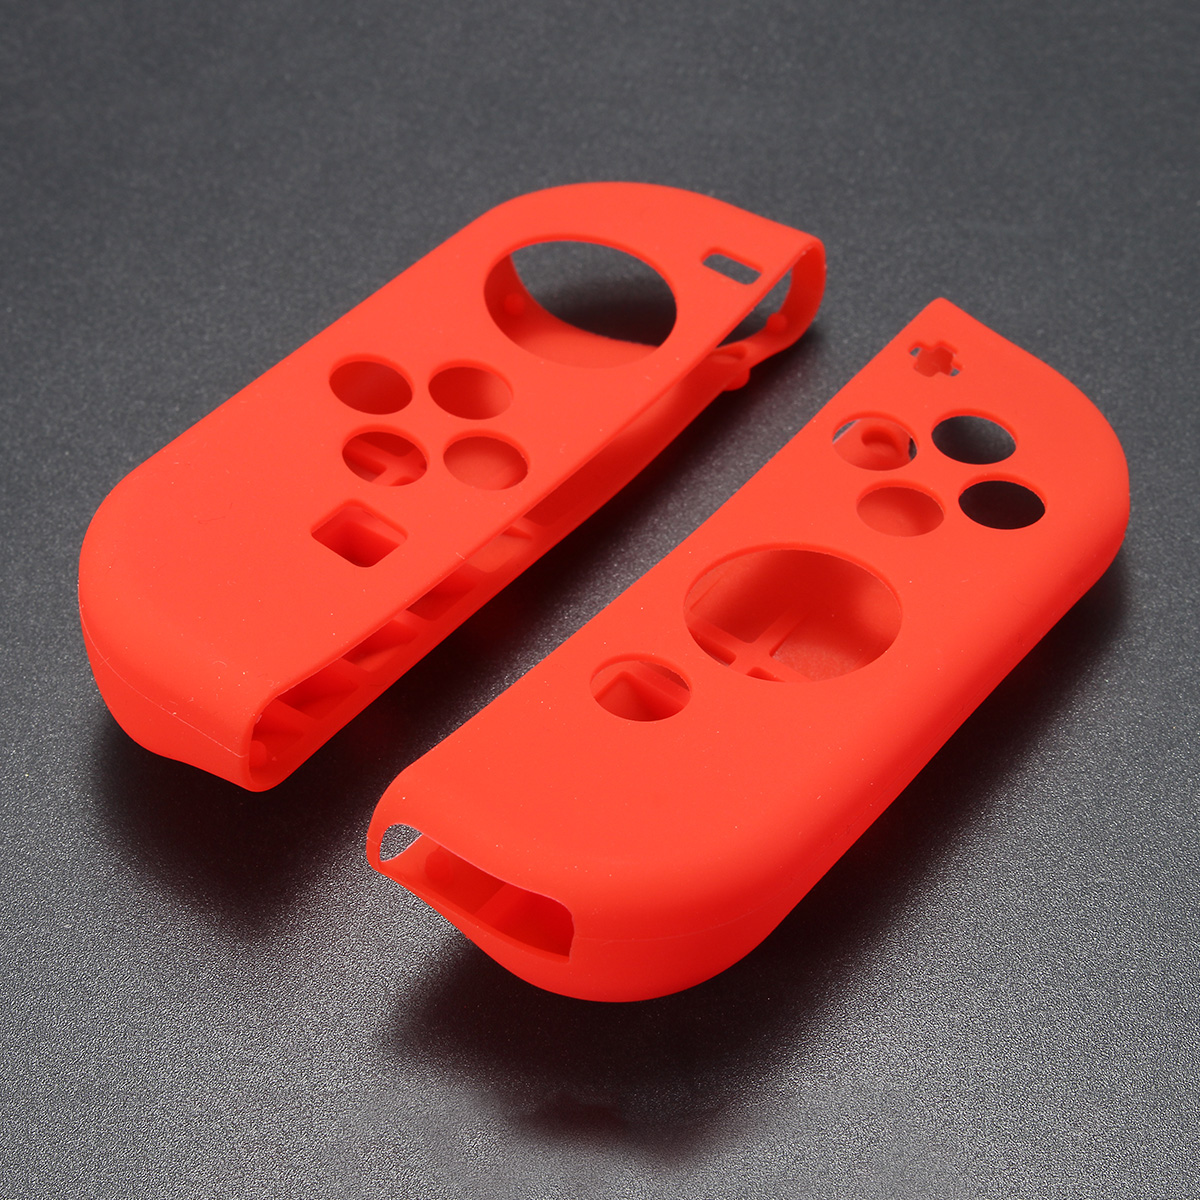 Silicon Case Protective Impact Resistant Rubber Skin Cover For Nintendo Switch Joy-Con Controller 10